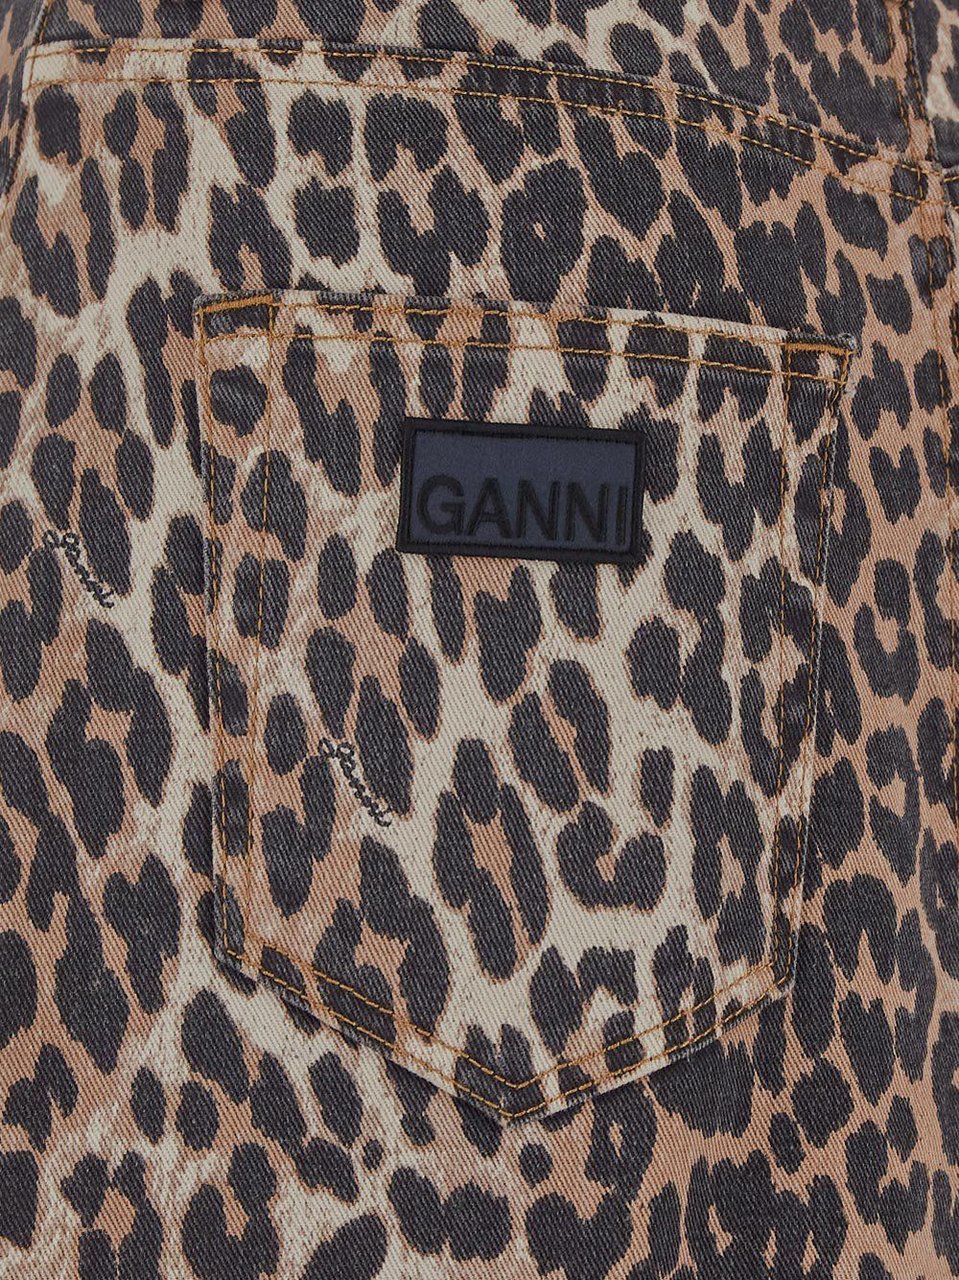 Ganni Leopard Skirt Bruin